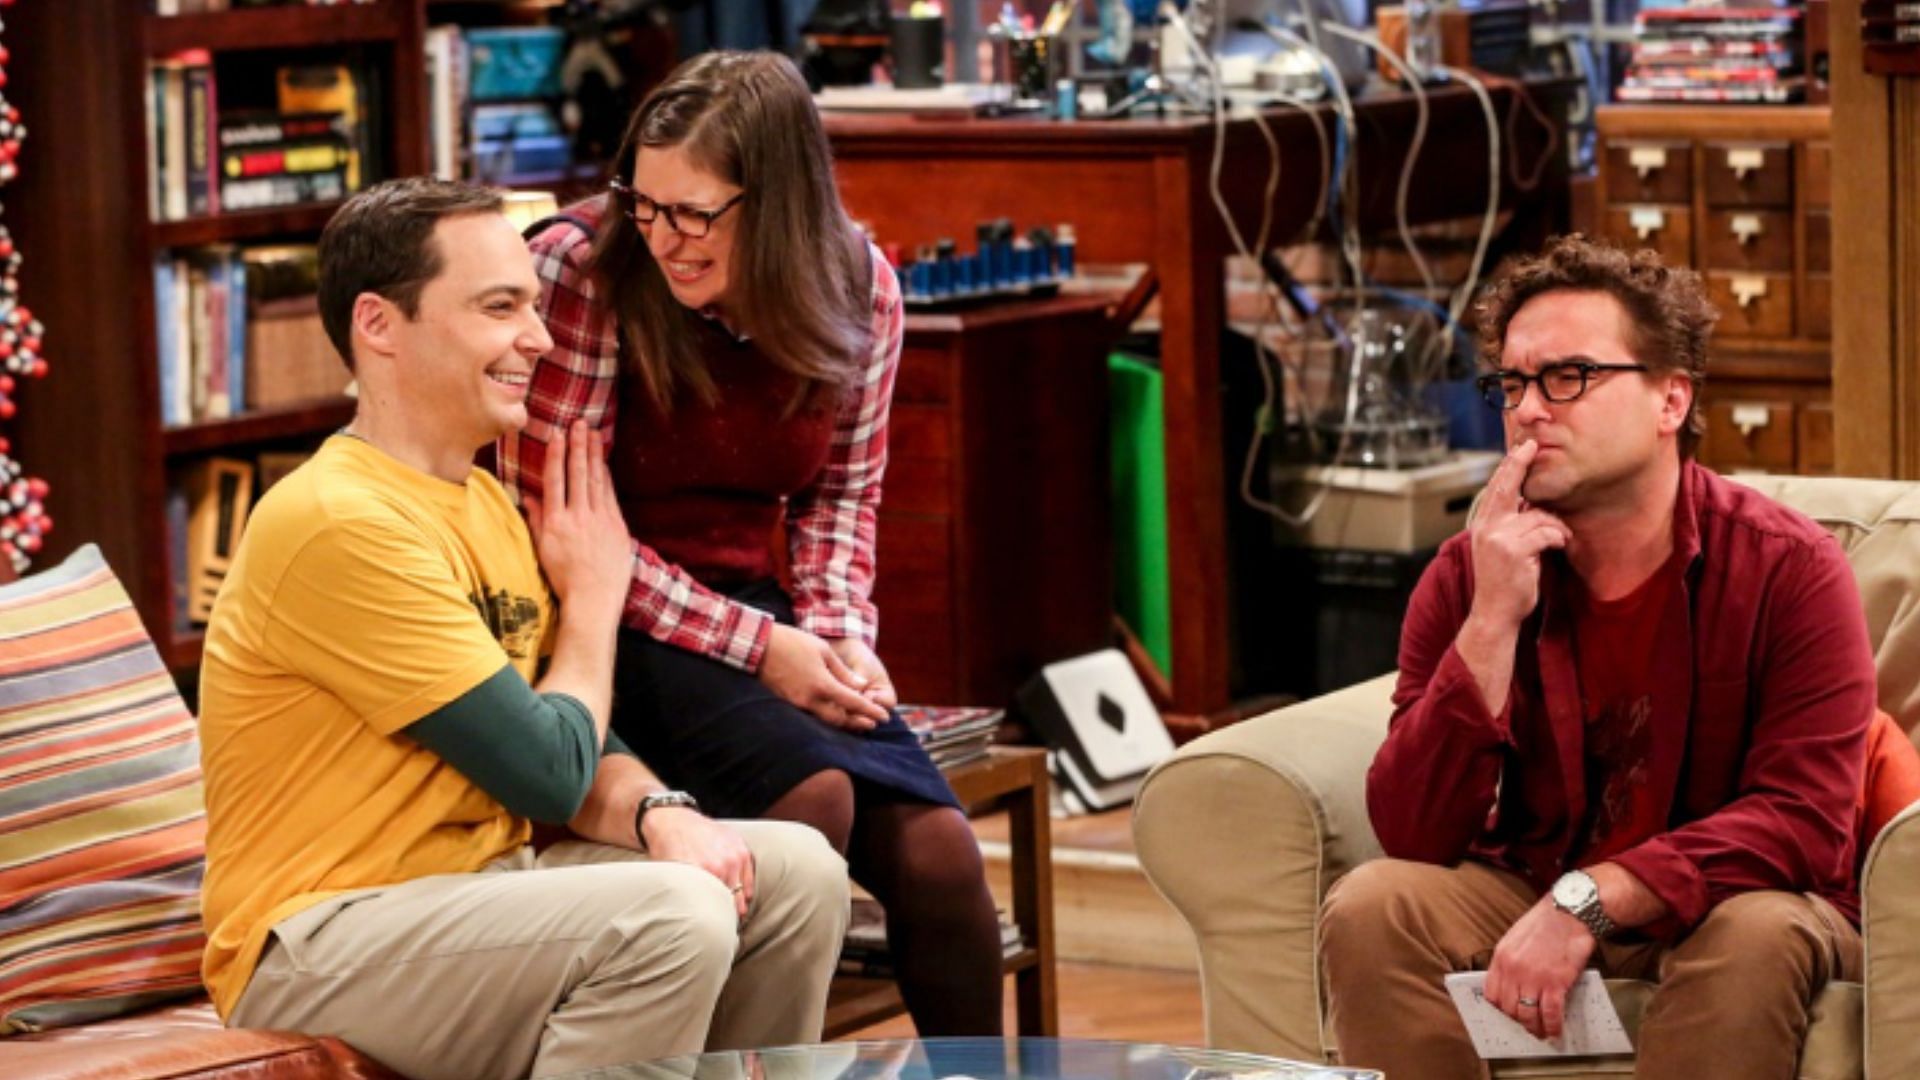 Sheldon and Amy in The Big Bang Theory (Image via Instagram @bigbangtheory)